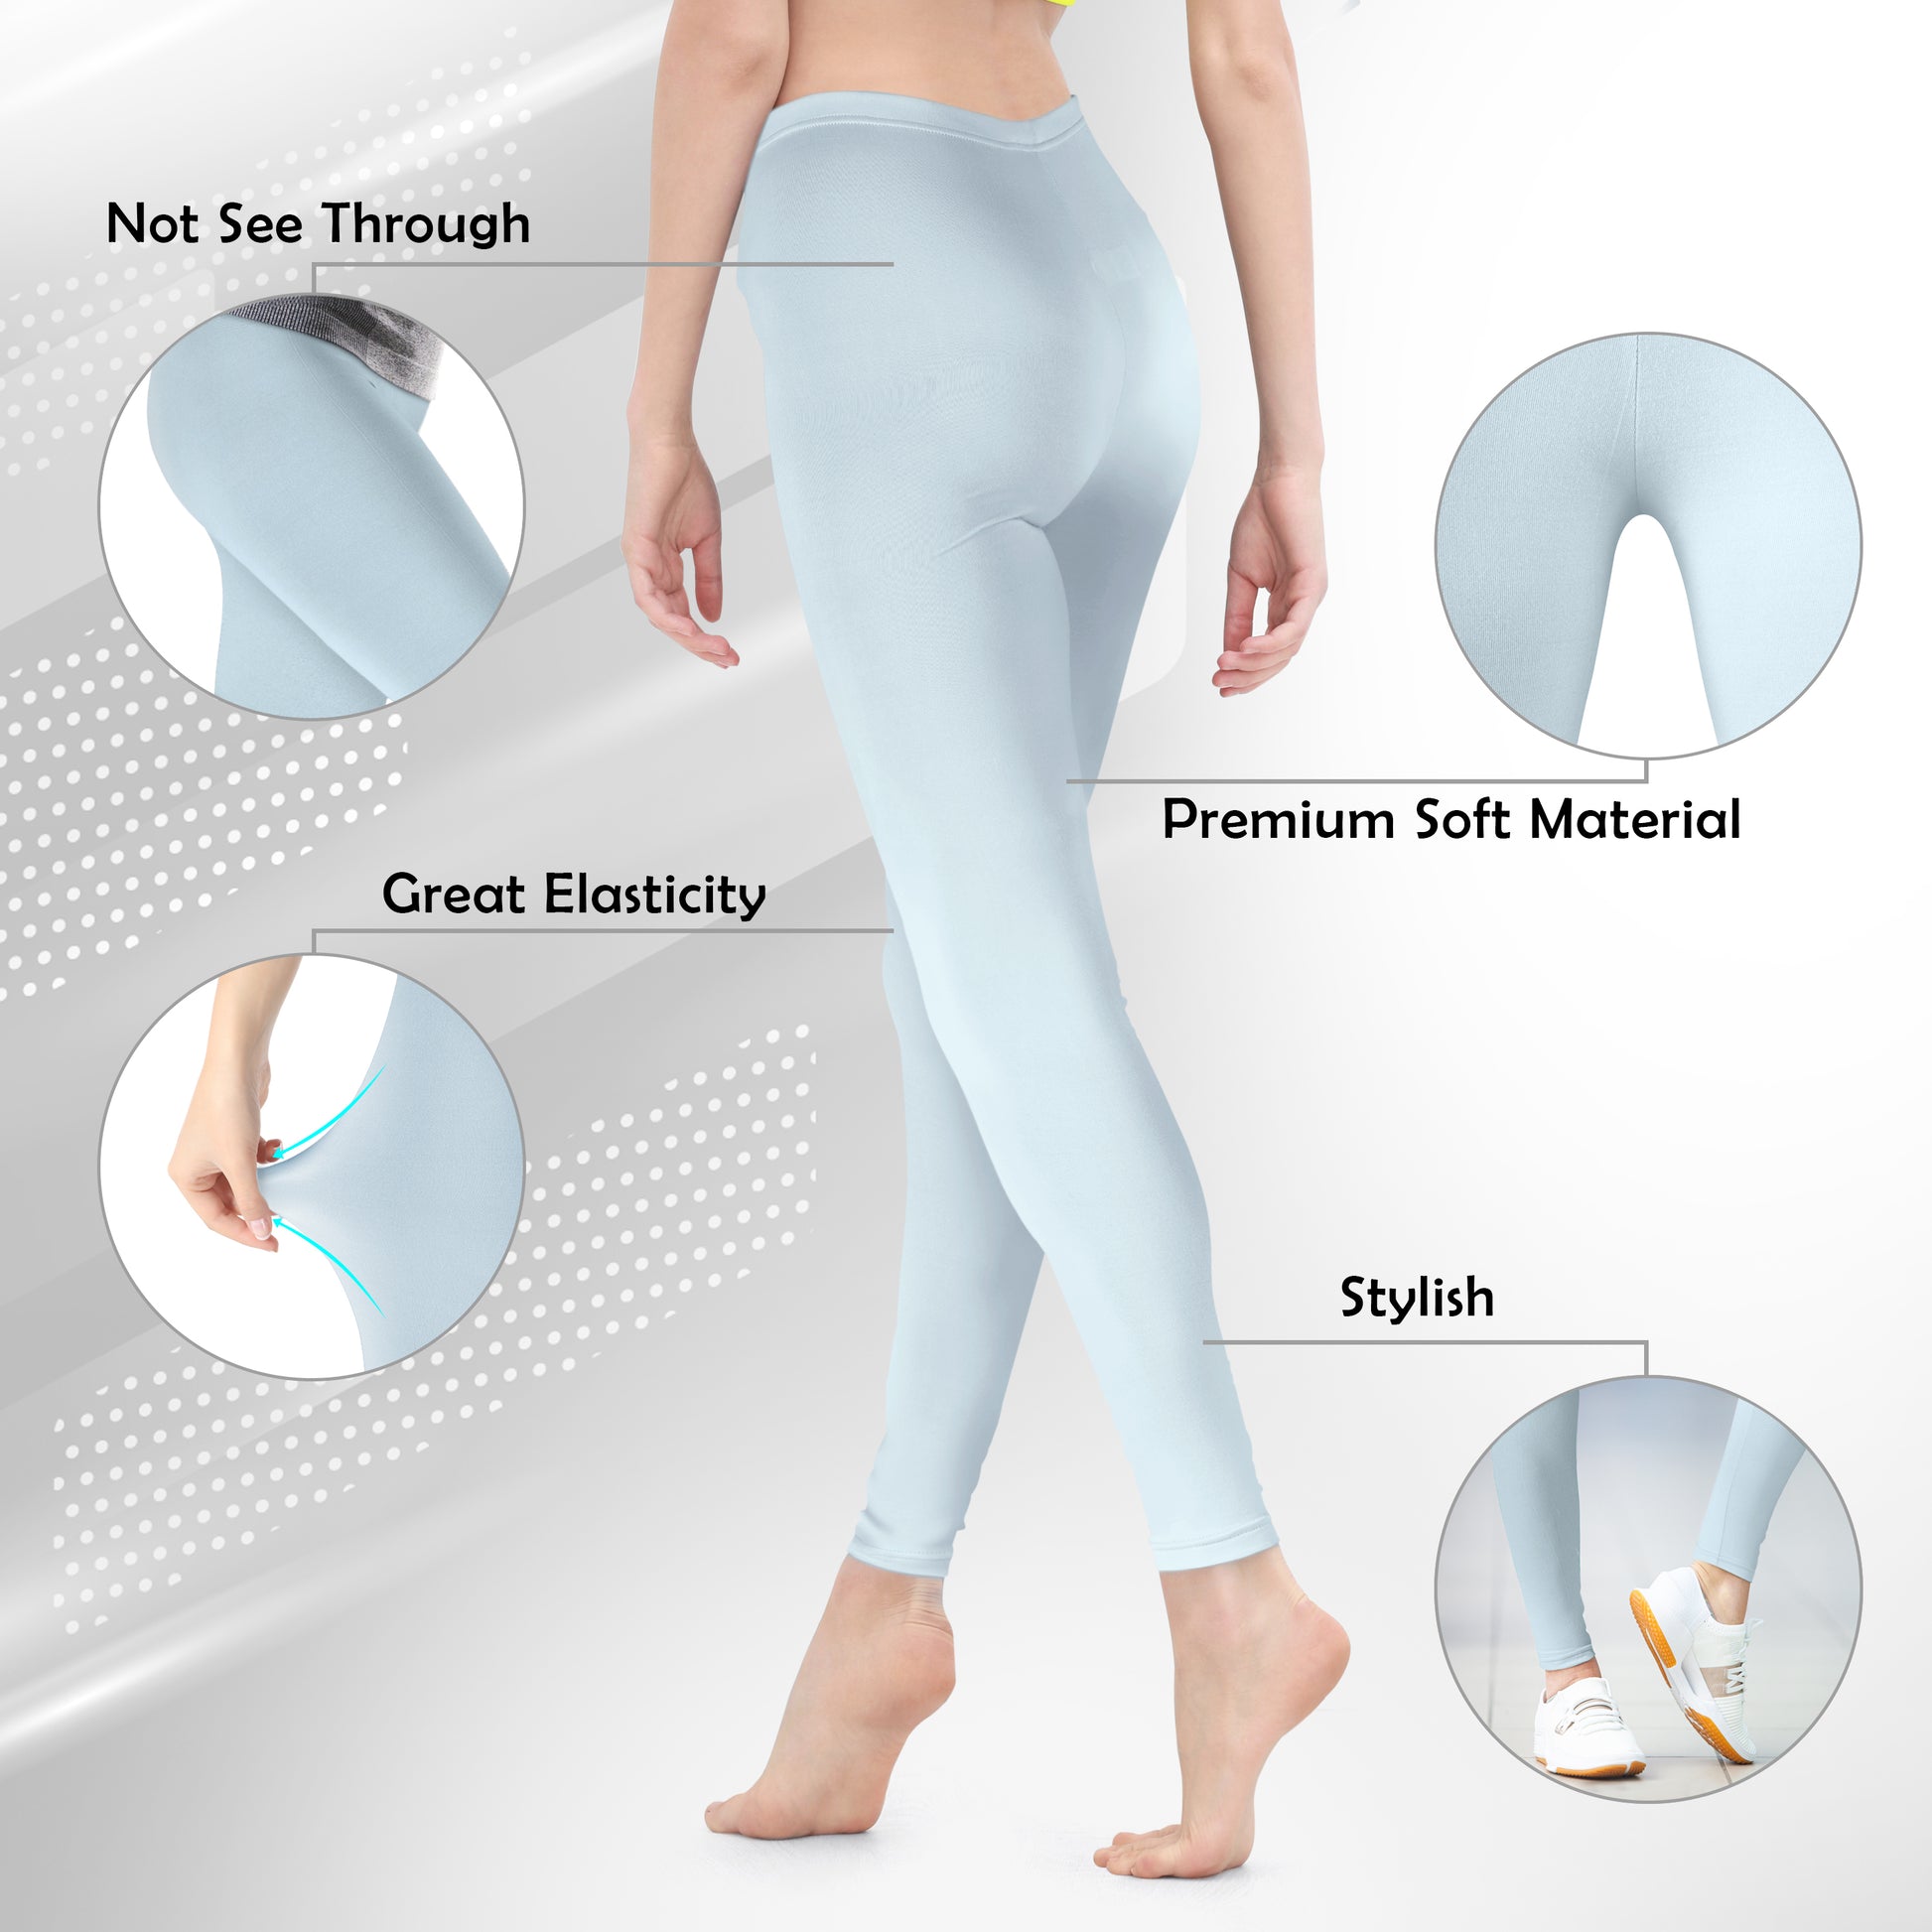 MYO2 Tye-Dye Print Fabric Stretchable Sportswear Leggings for Women Get  Extra Breathable, Double Brushed, Interlock Weaved Premium Leggings